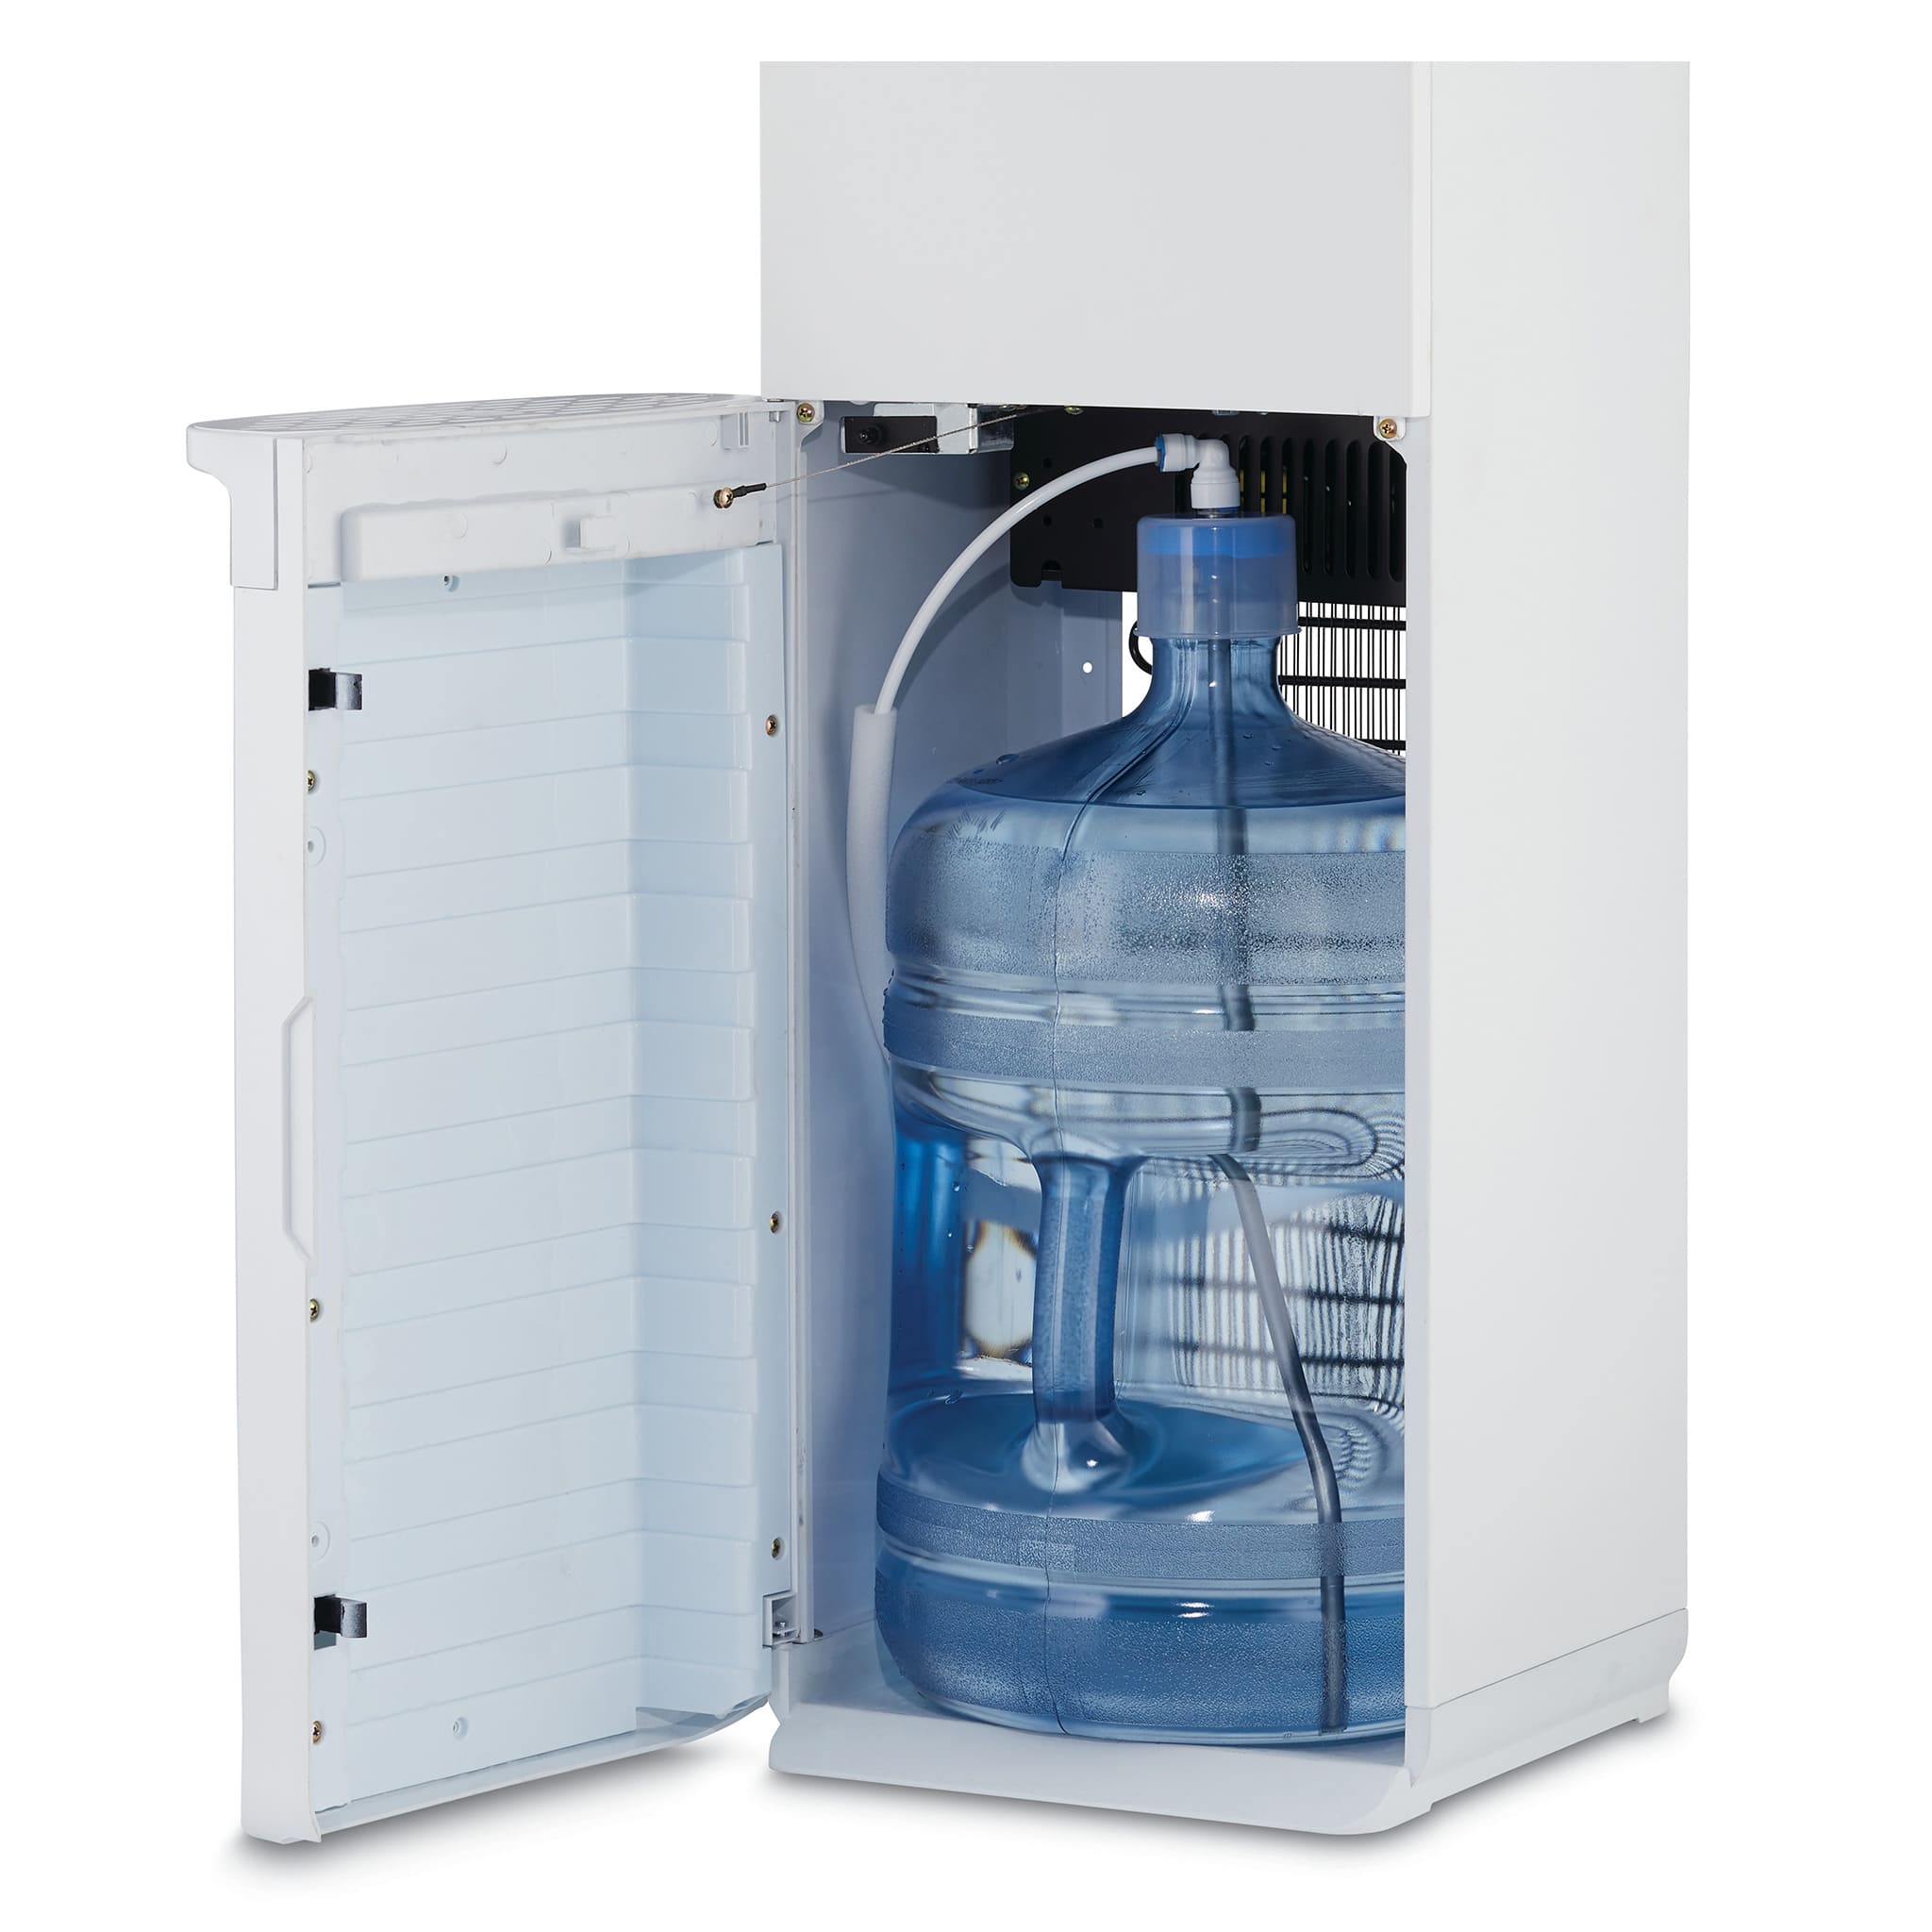 NemoHome Water Cooler Dispenser Mat for Hardwood Floor and Countertop, Heat Resistant, Support Heavy Weight, Large, Grey